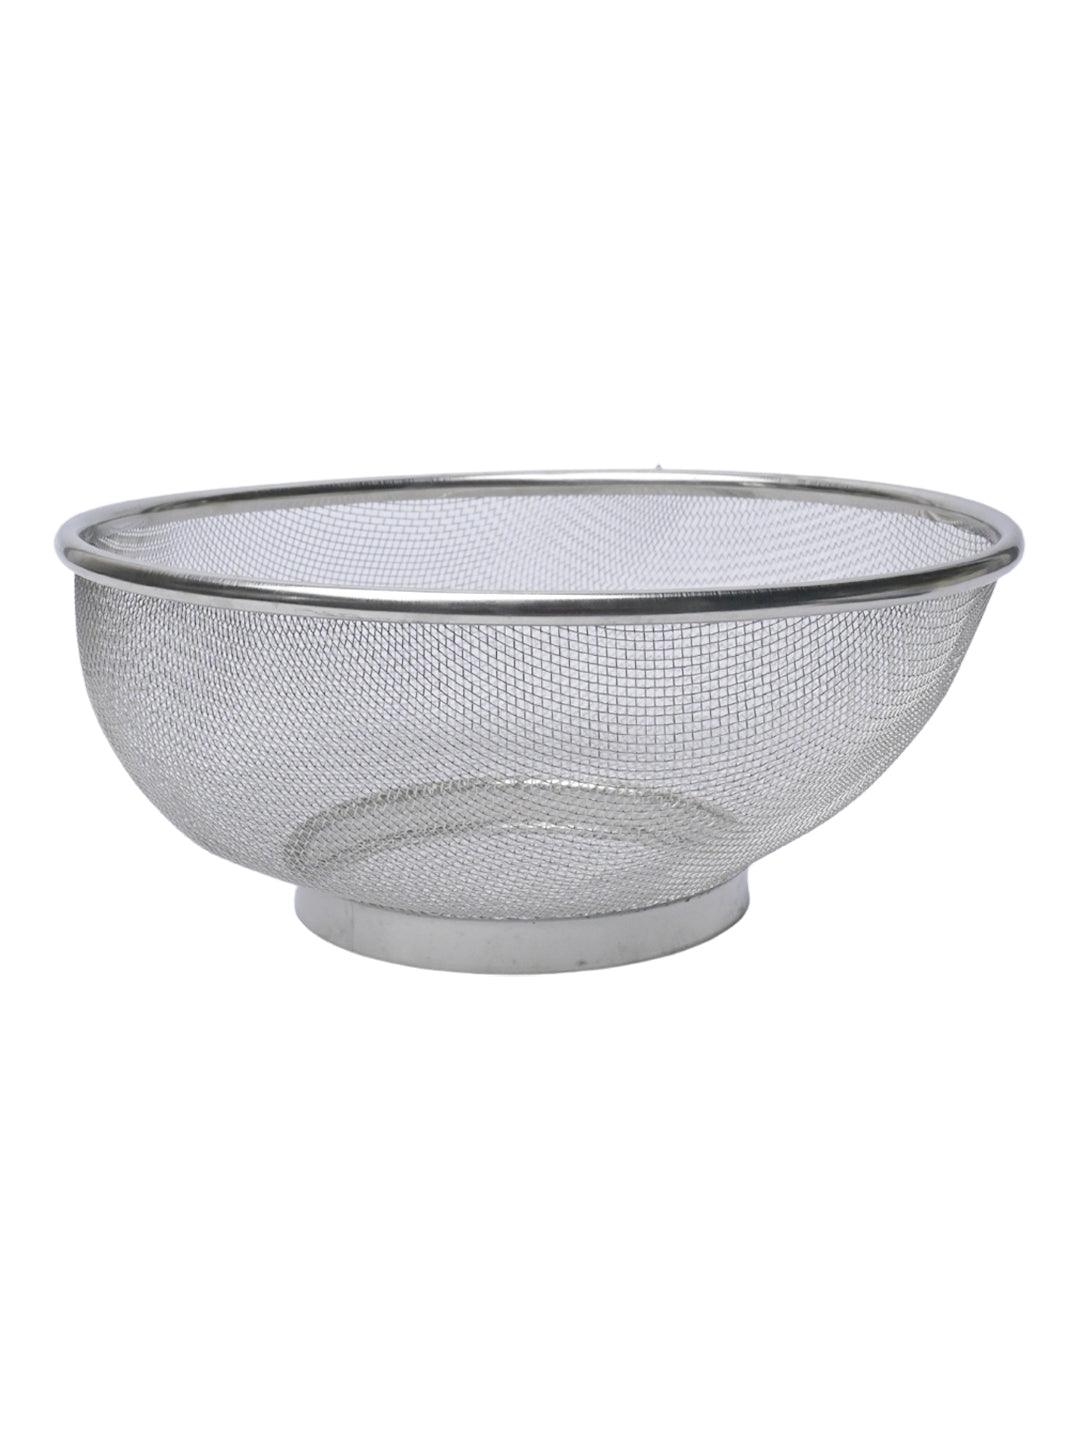 Mesh Colander Basket, Silver, Stainless Steel